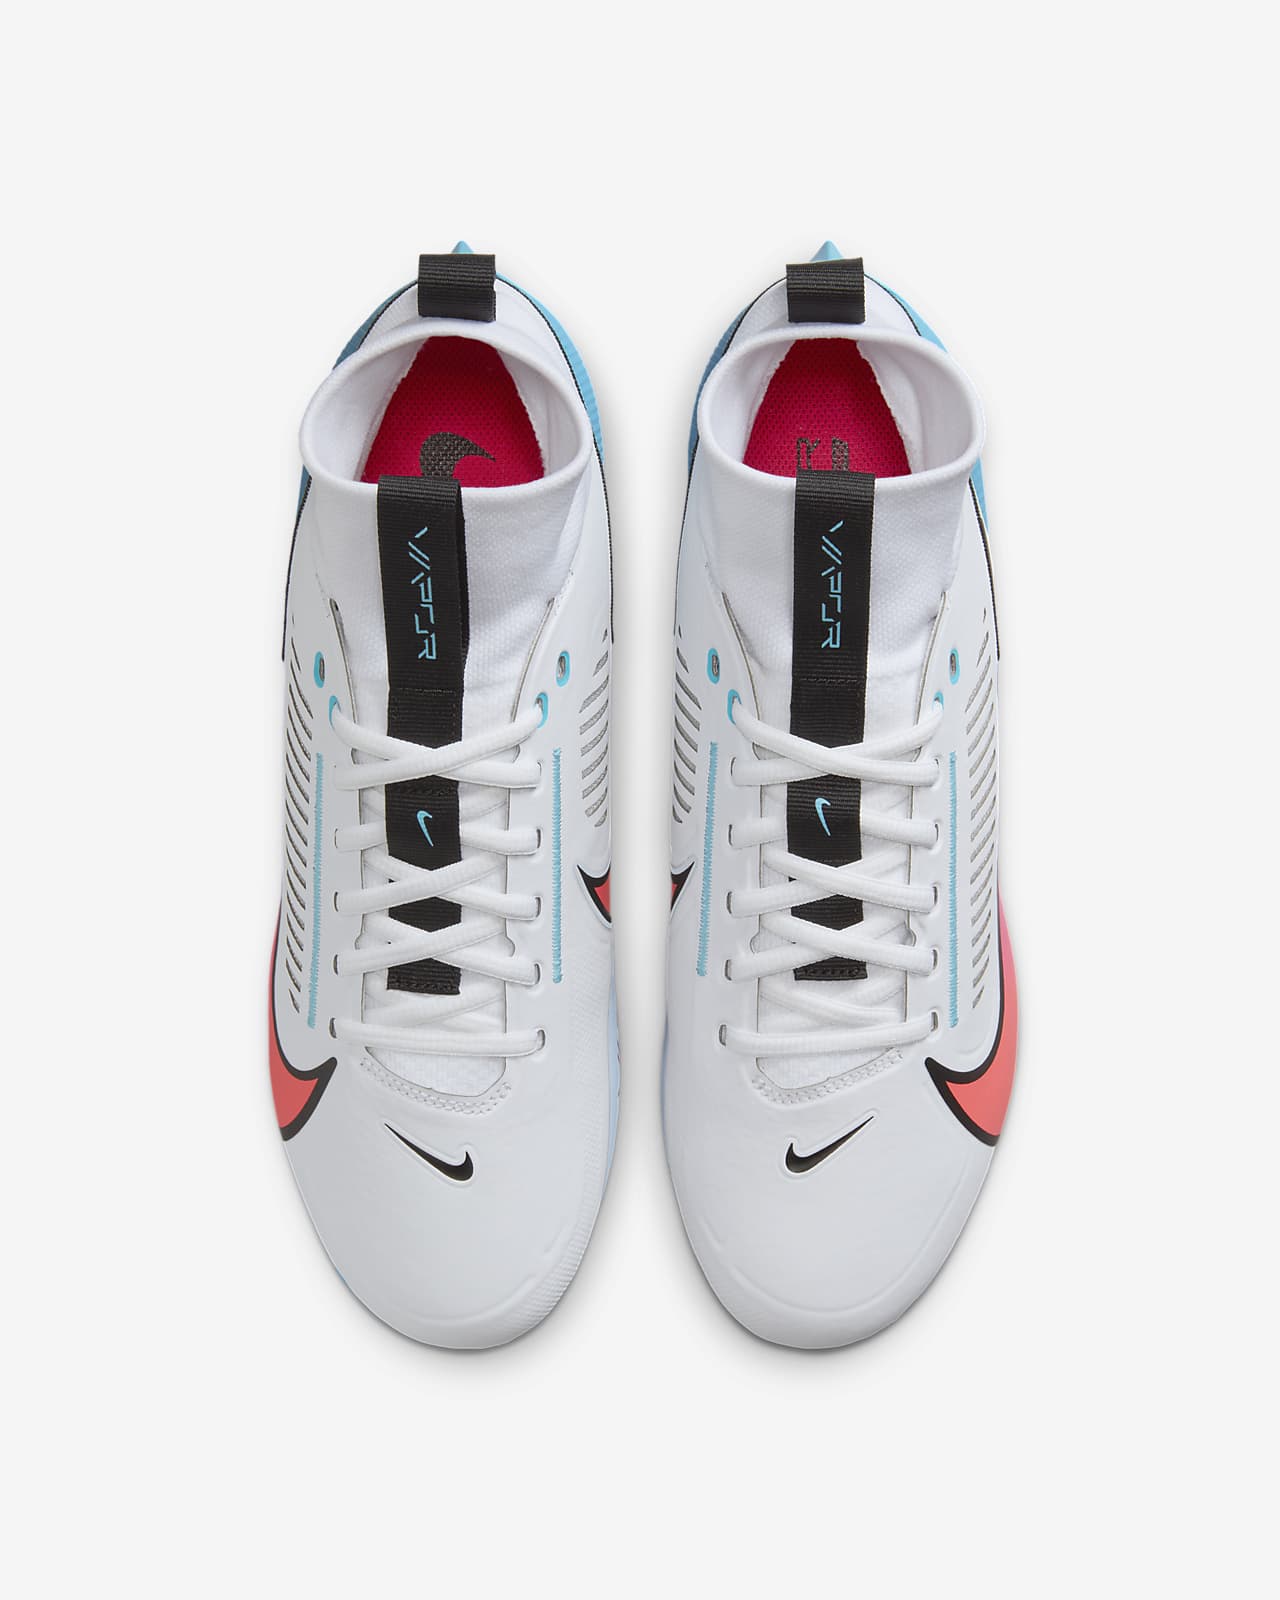 PE Air Jordan Nike Vapor Edge Pro 360 Football Cleats Black Men’s Size 12  READ